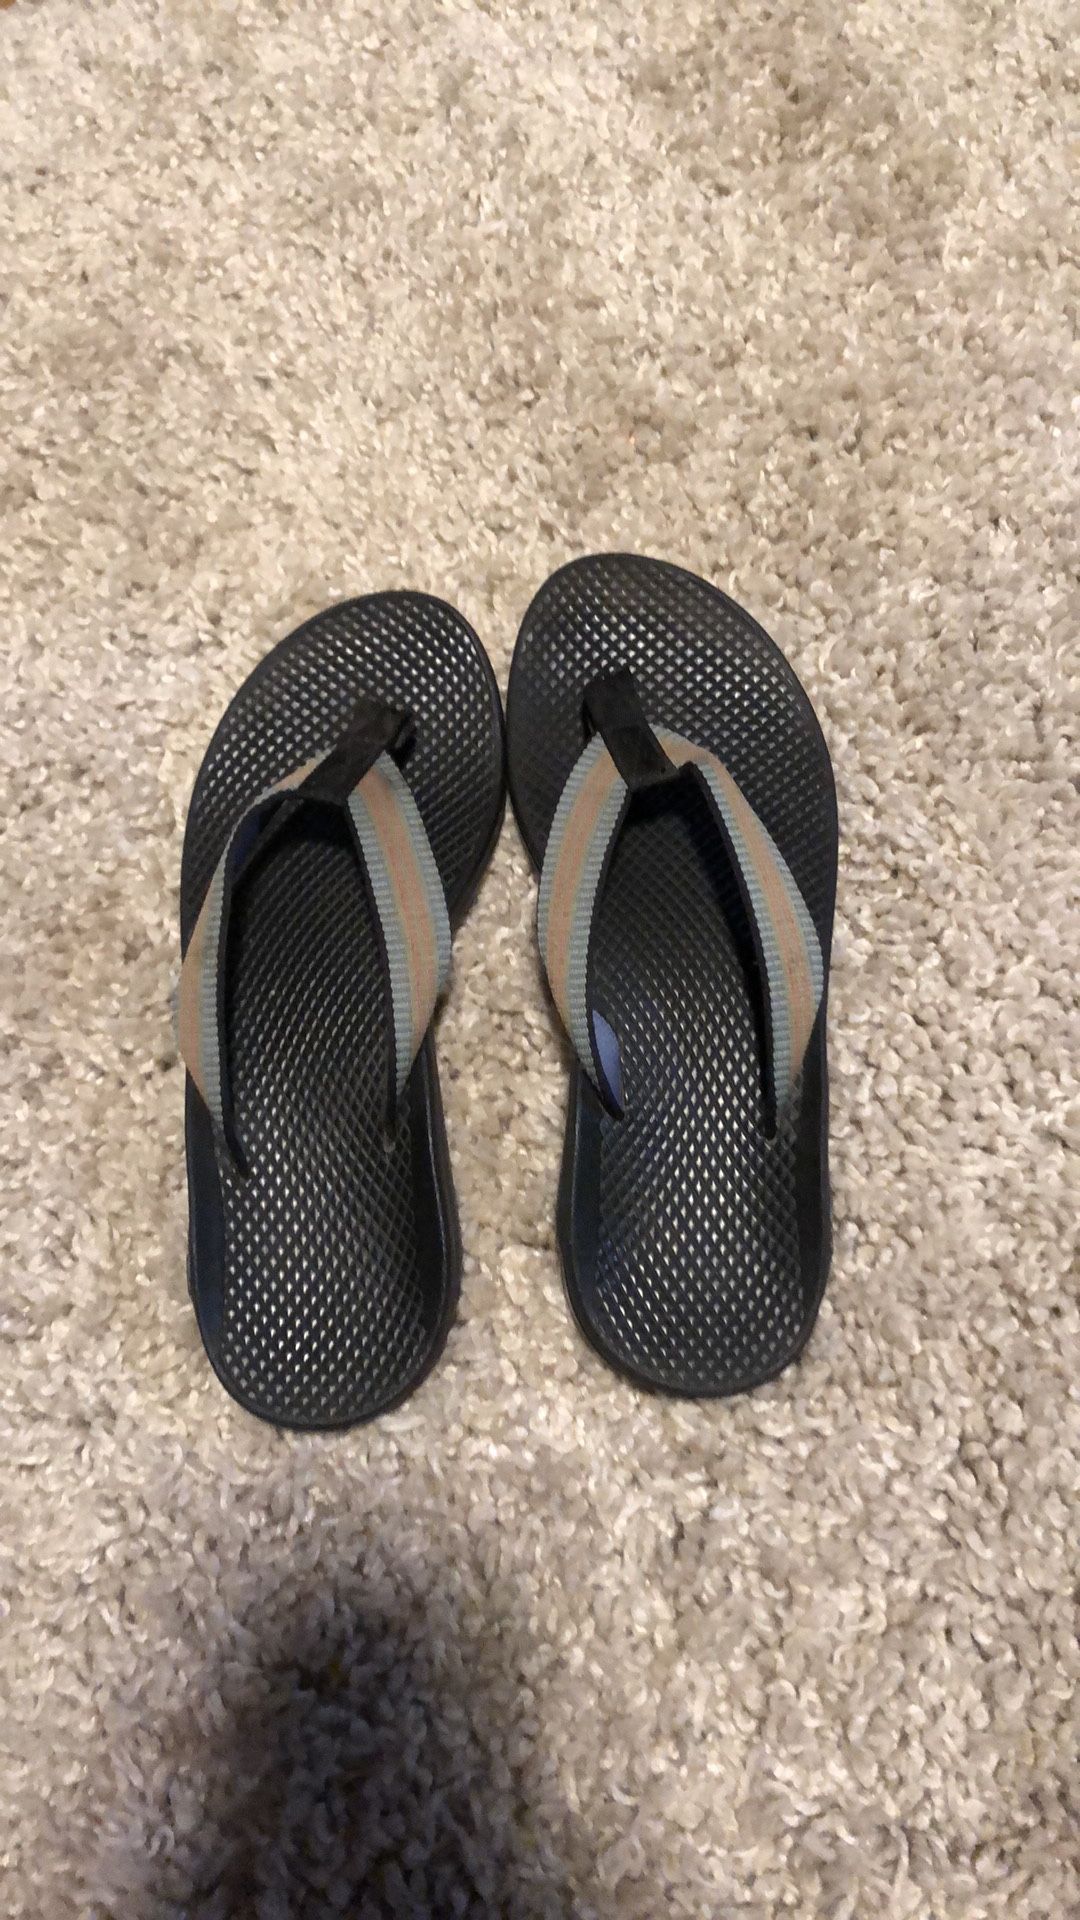 Women’s Chaco Flip flop size 8